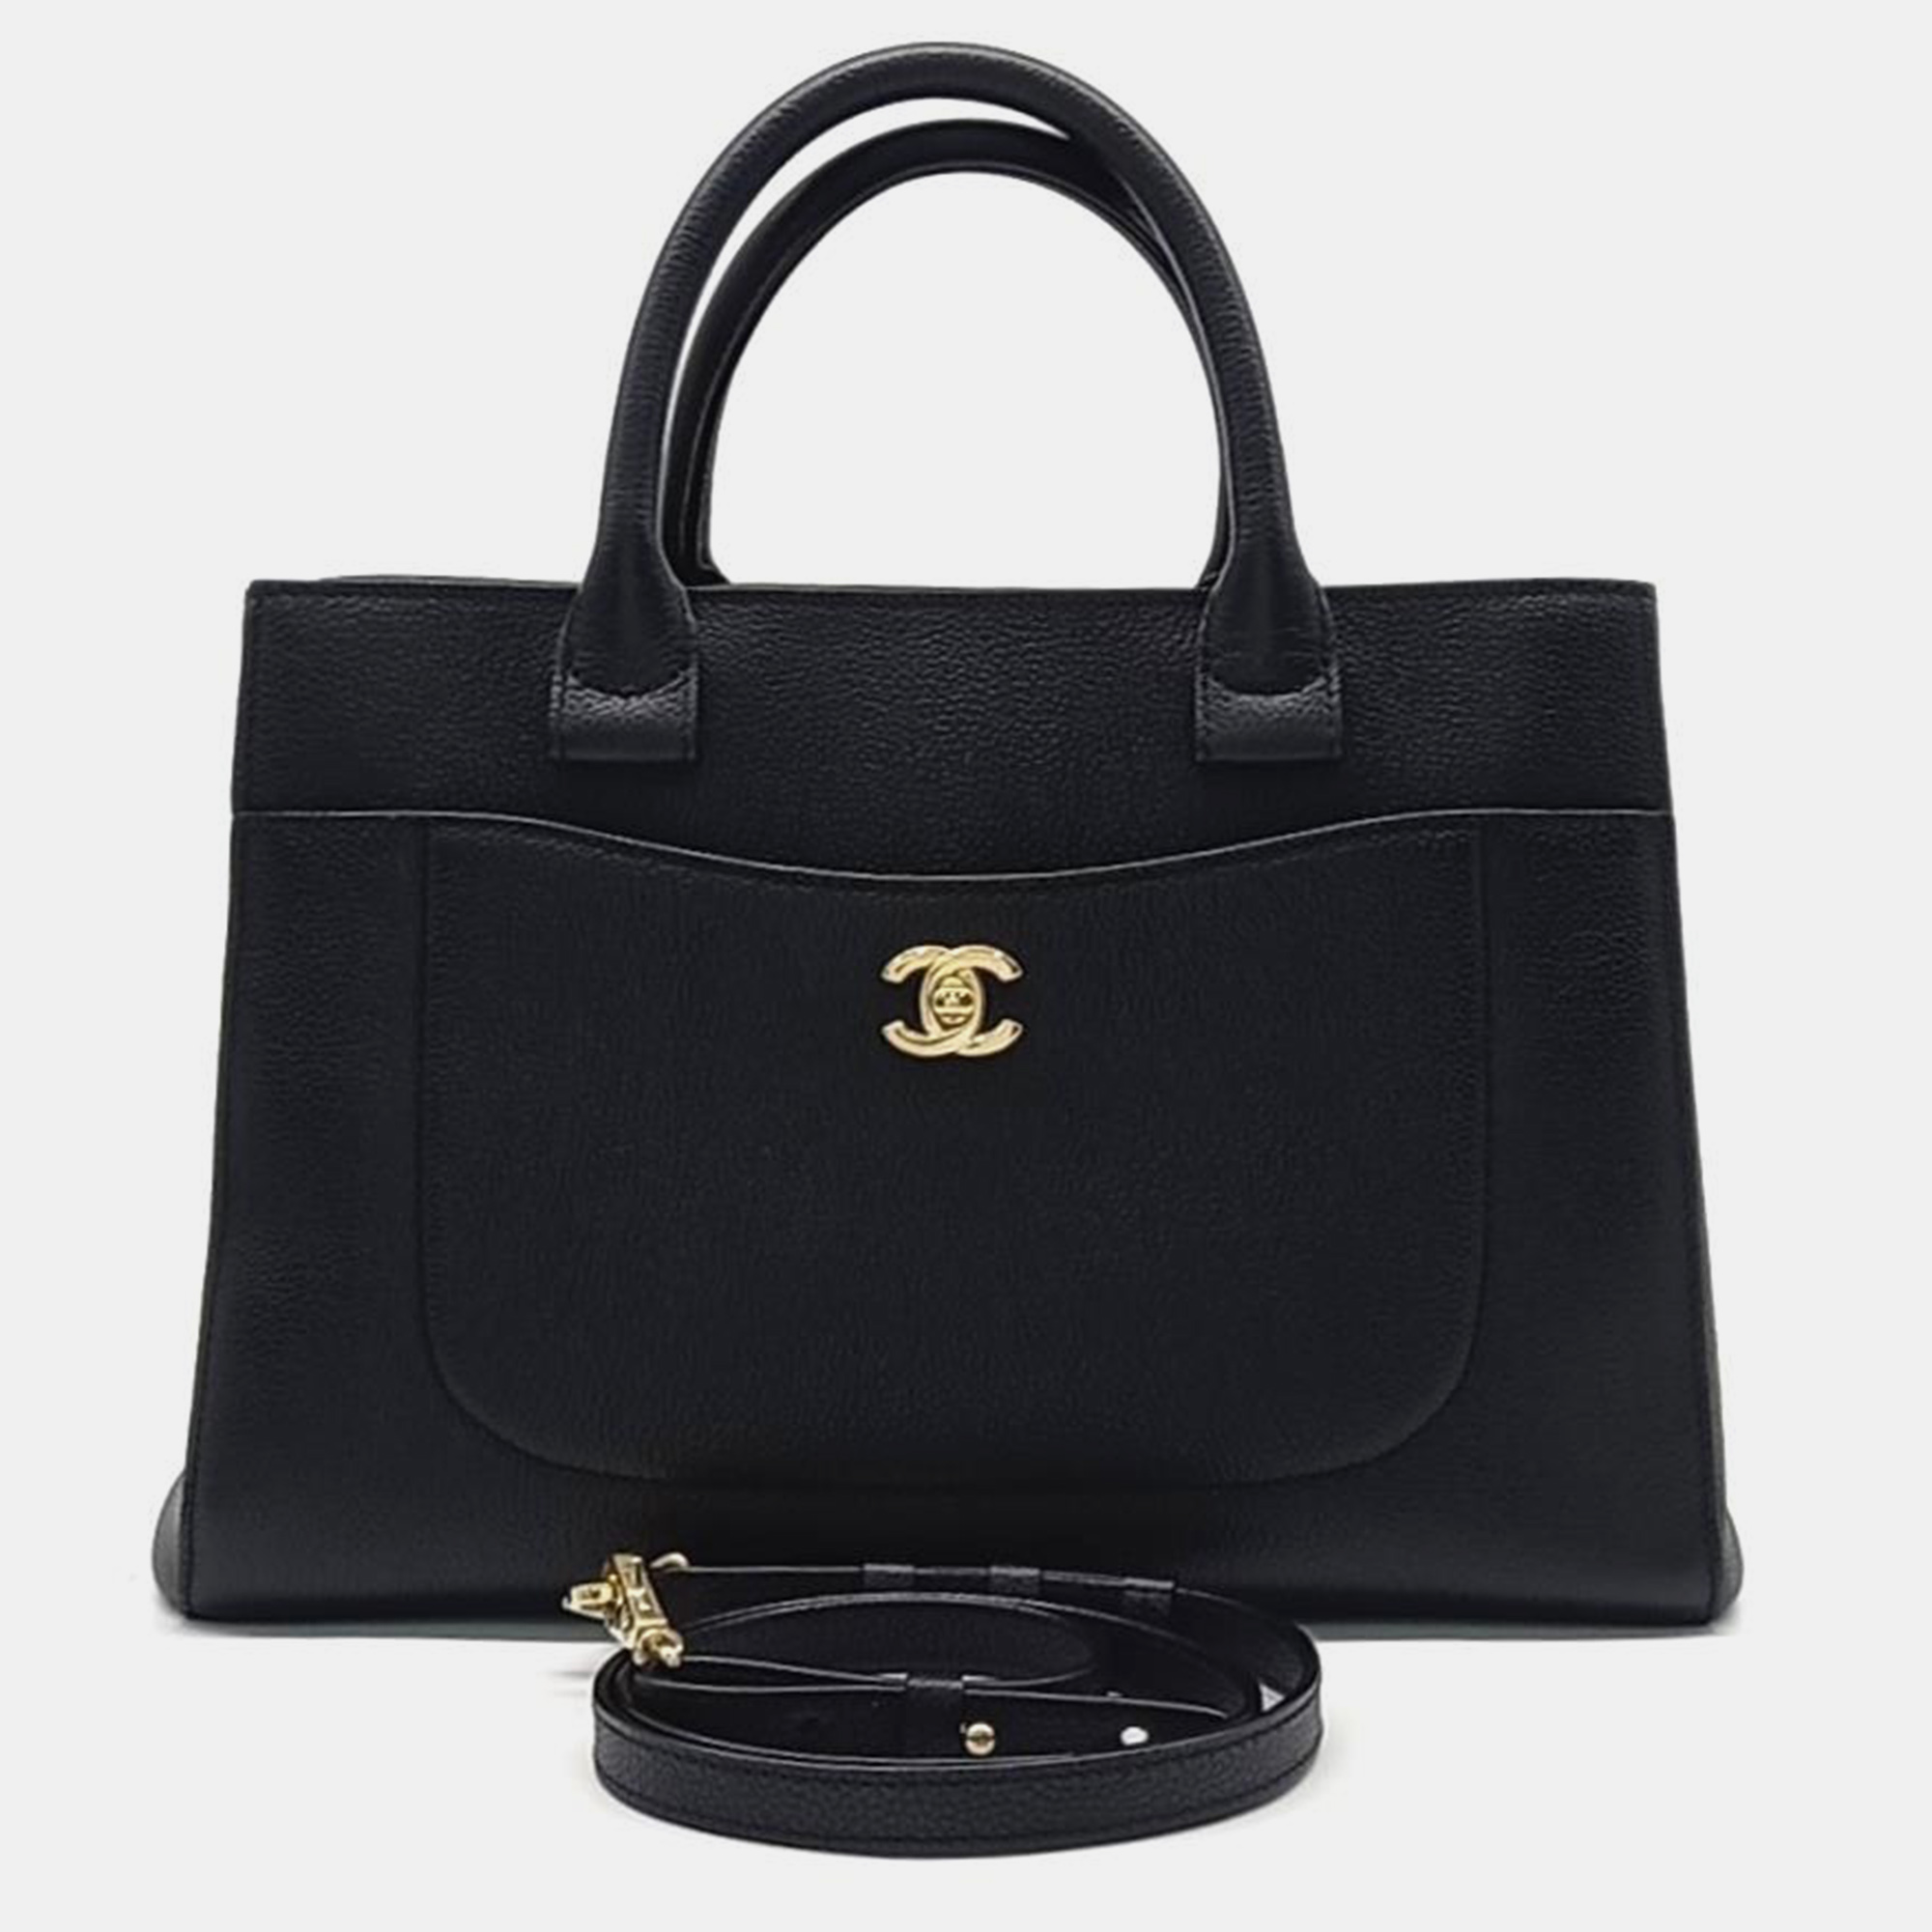 Chanel black leather medium neo executive tote bag